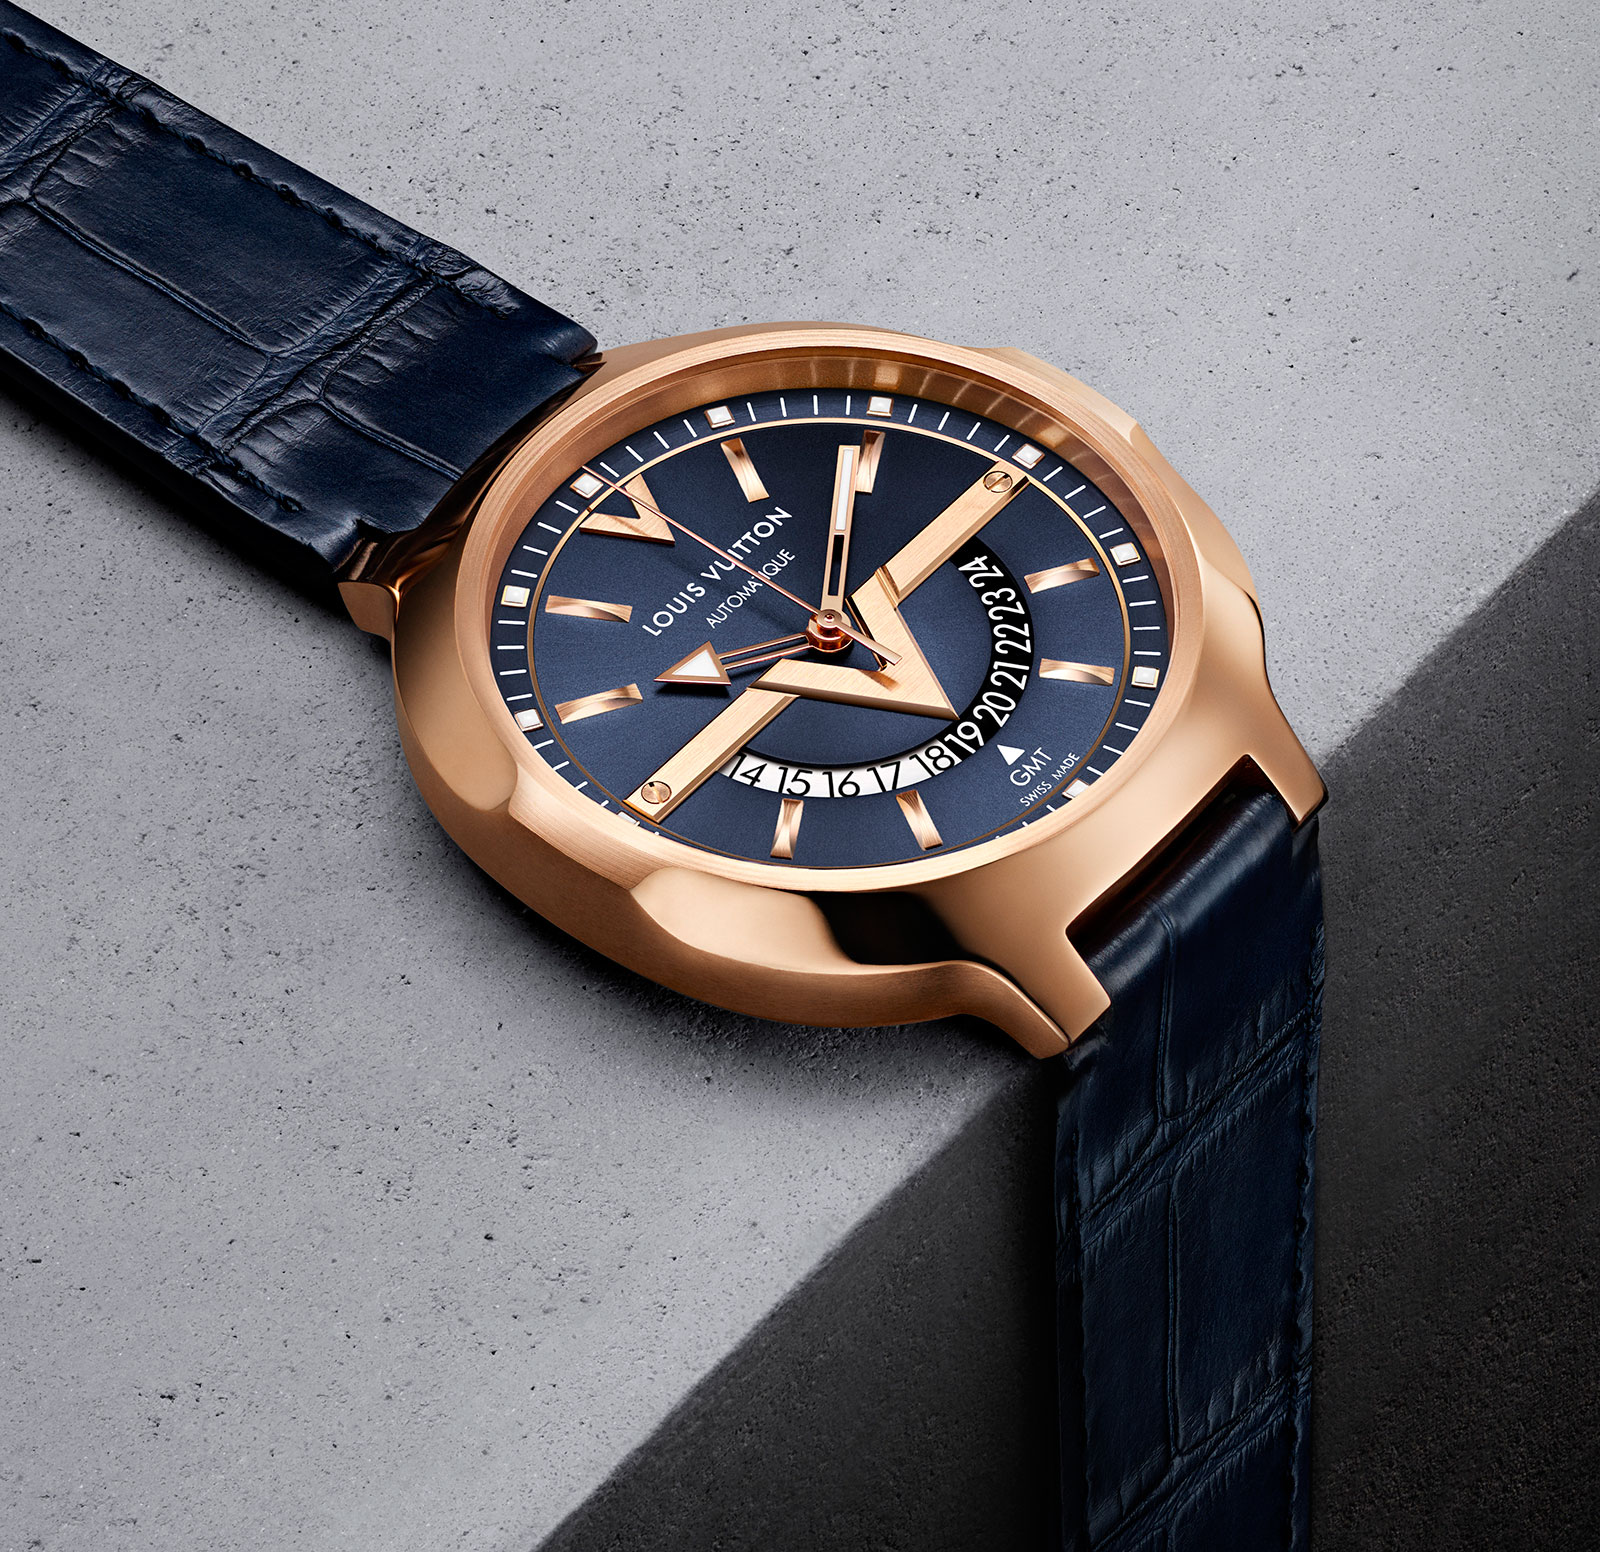 Louis Vuitton Gmt Tourbillion Watch